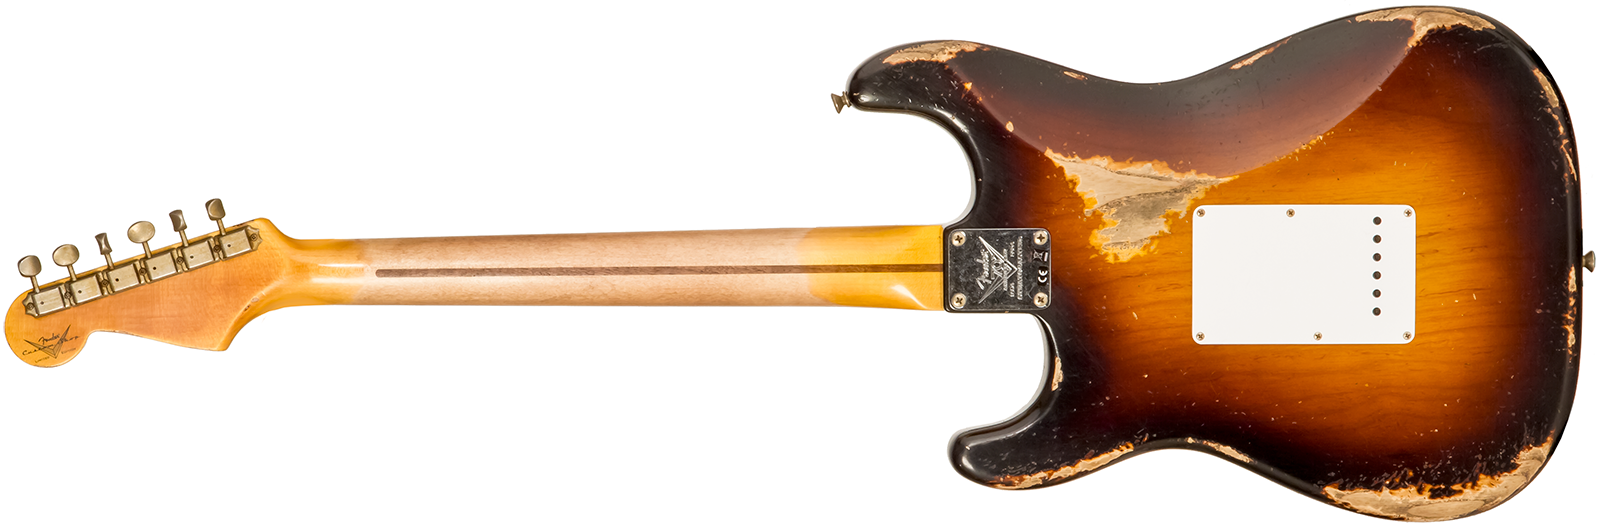 Fender Custom Shop Strat 1954 70th Anniv. 3s Trem Mn #xn4324 - Heavy Relic Wide Fade 2-color Sunburst - Str shape electric guitar - Variation 1